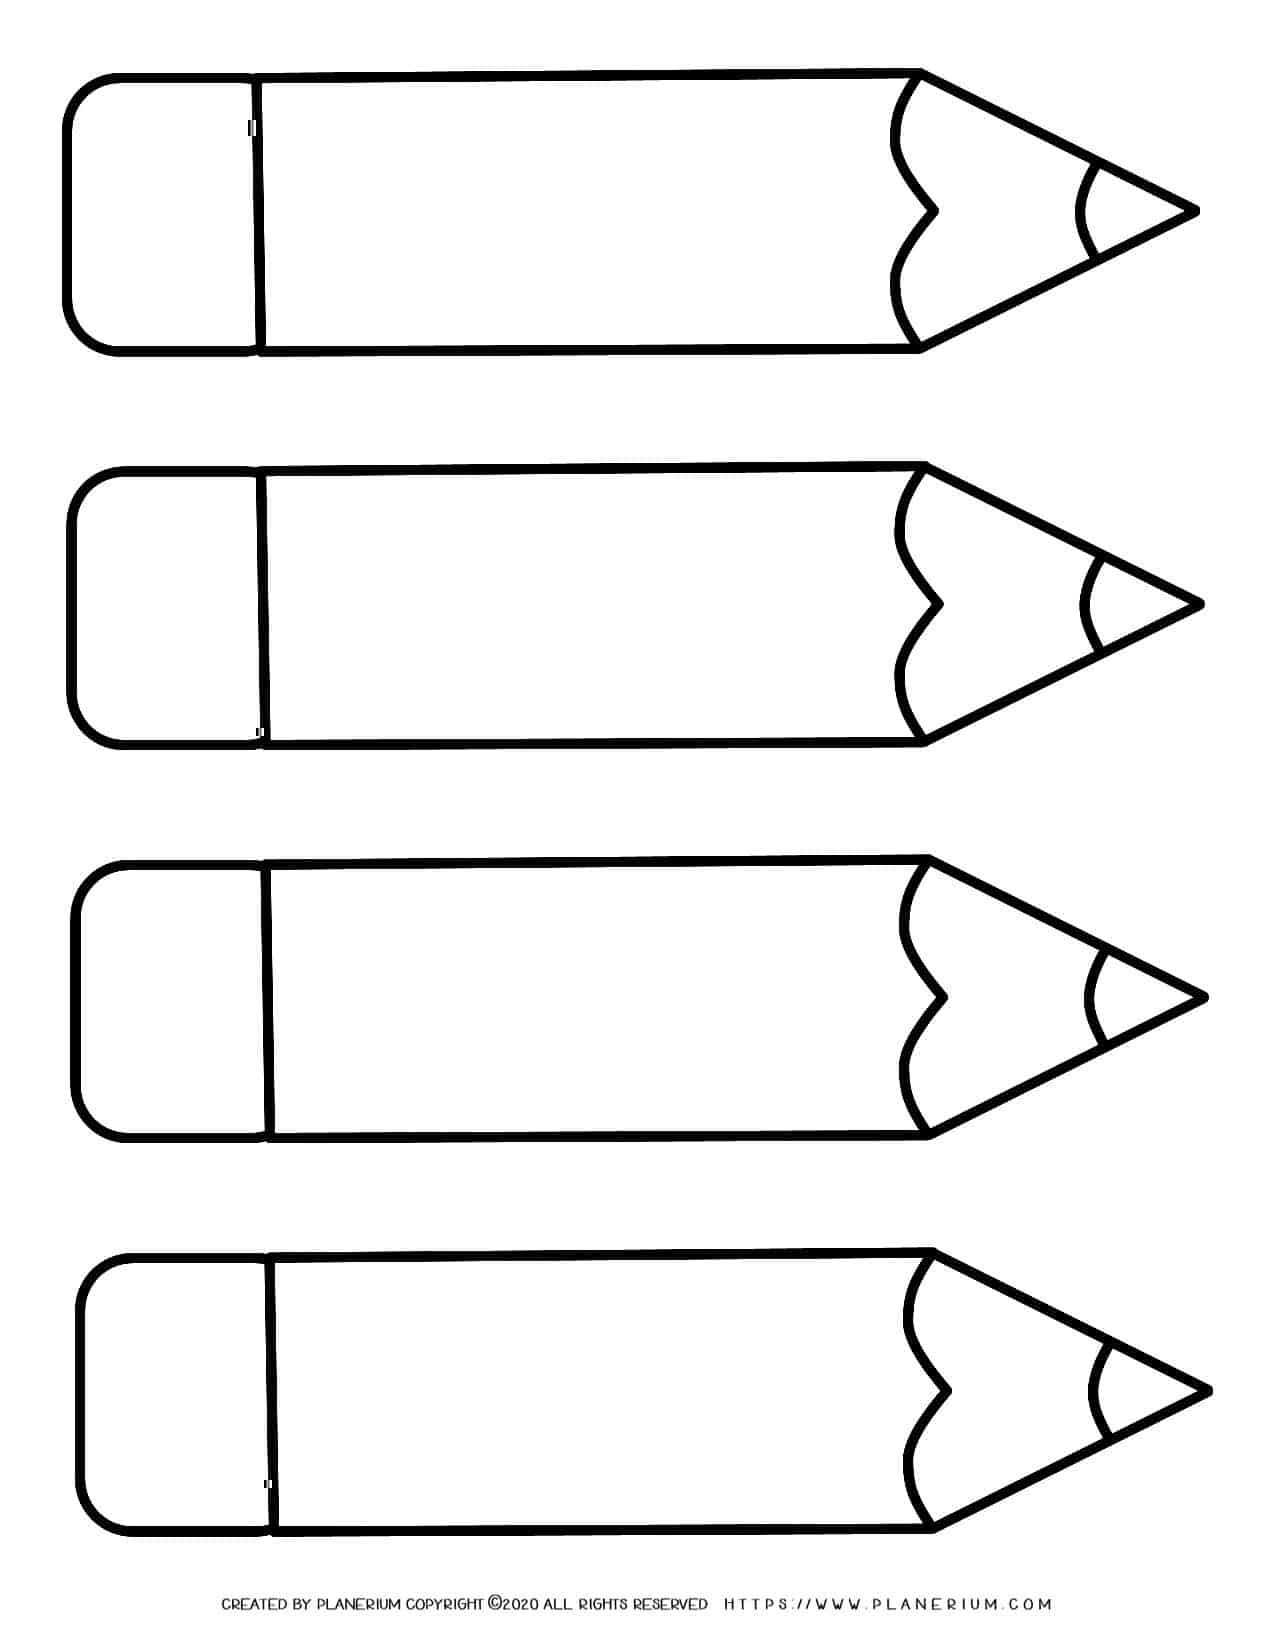 Four Pencils Template Planerium